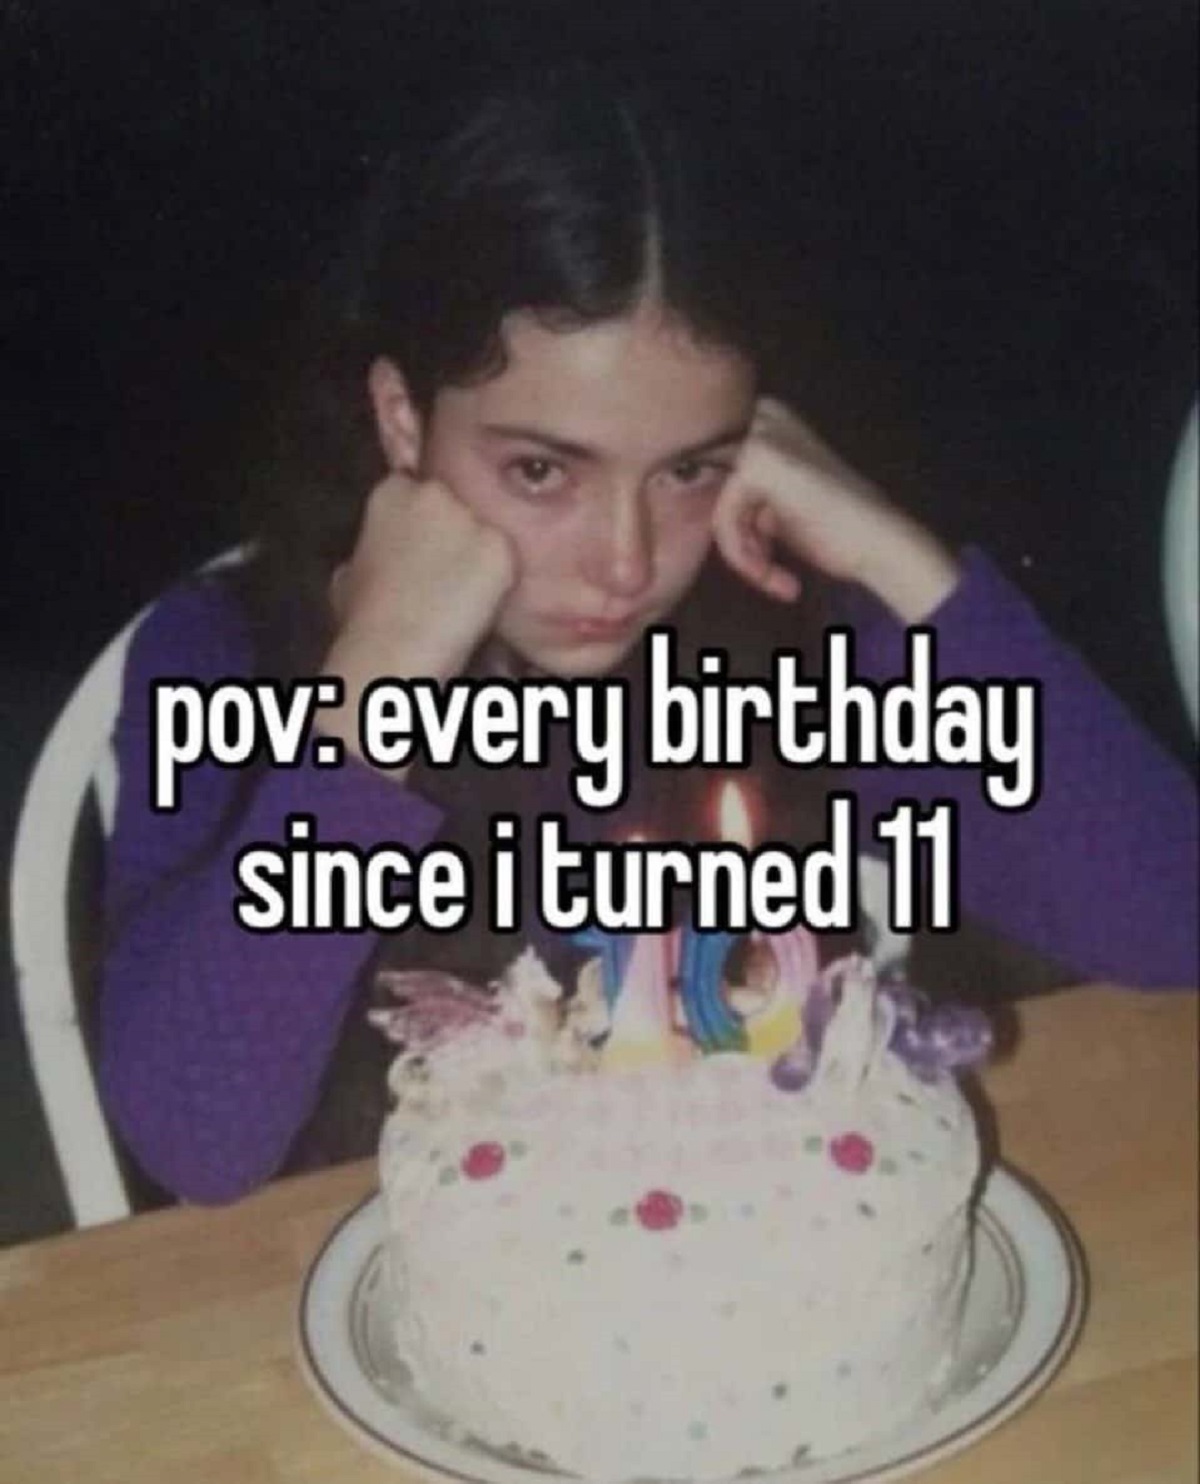 sad birthday cake aesthetic - pov every birthday since i turned 11